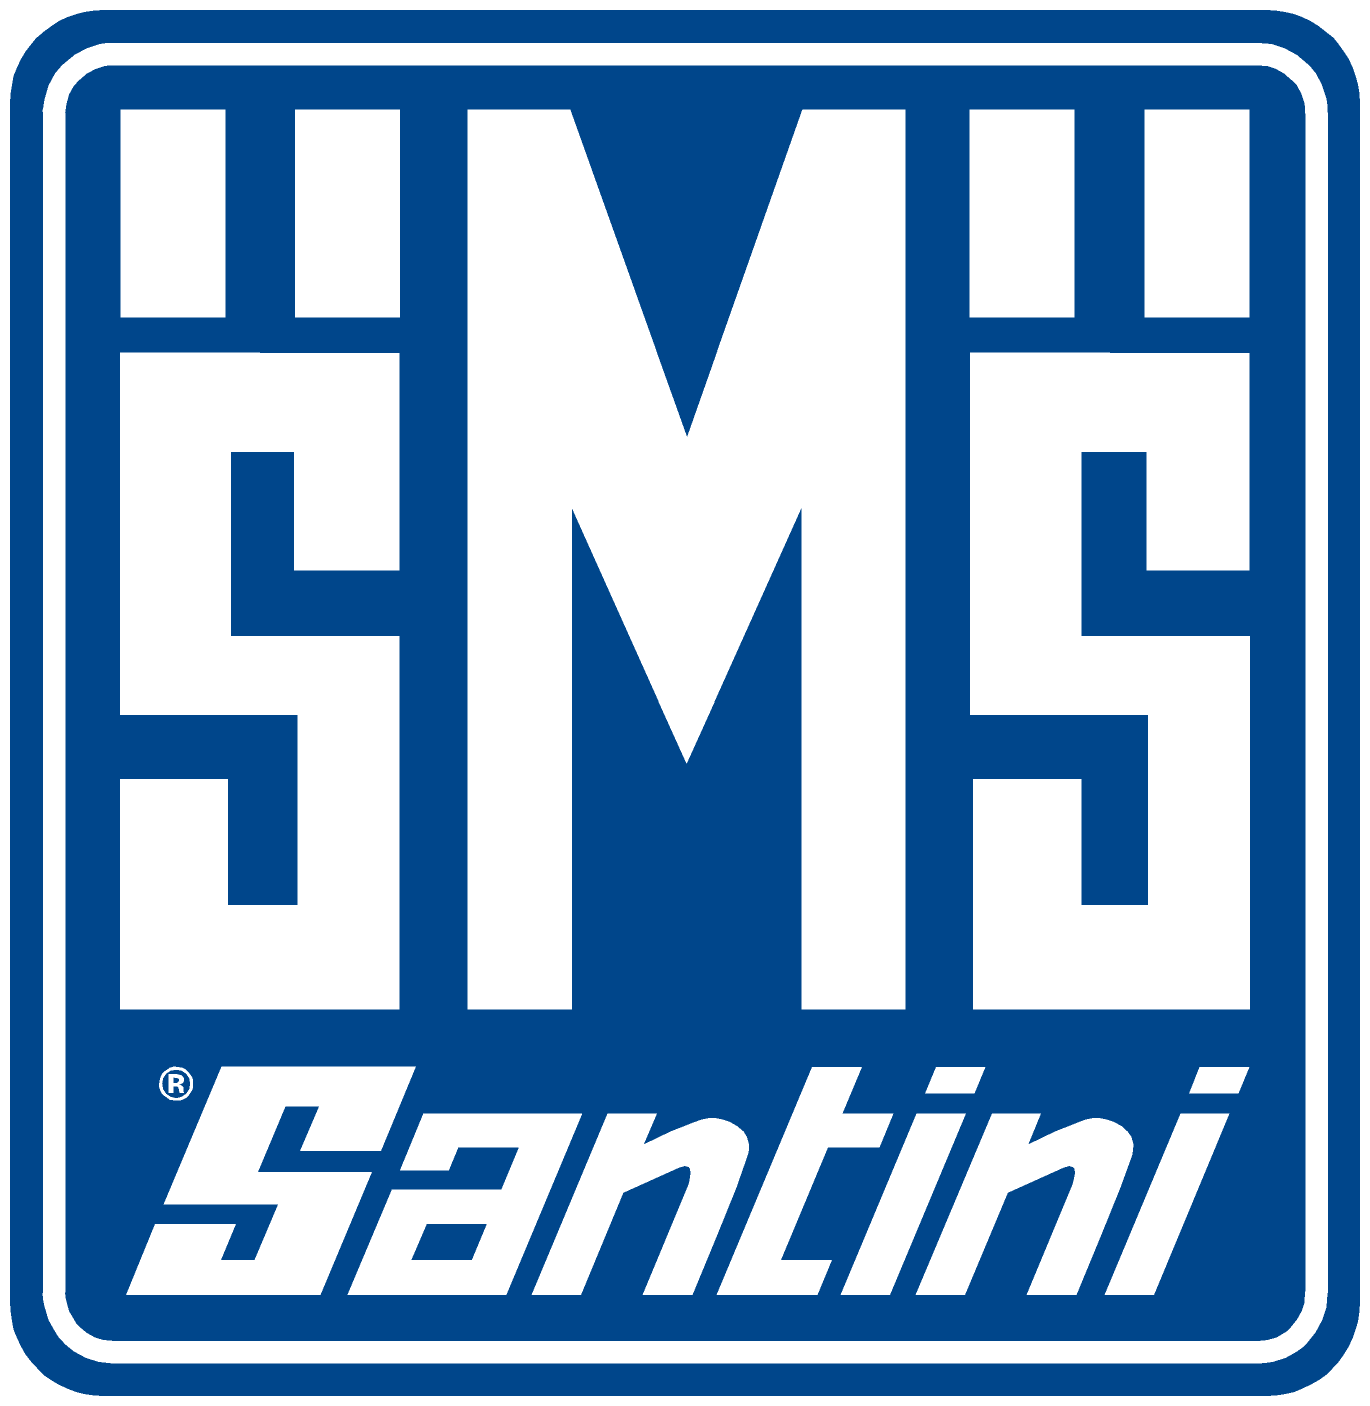 logo santini